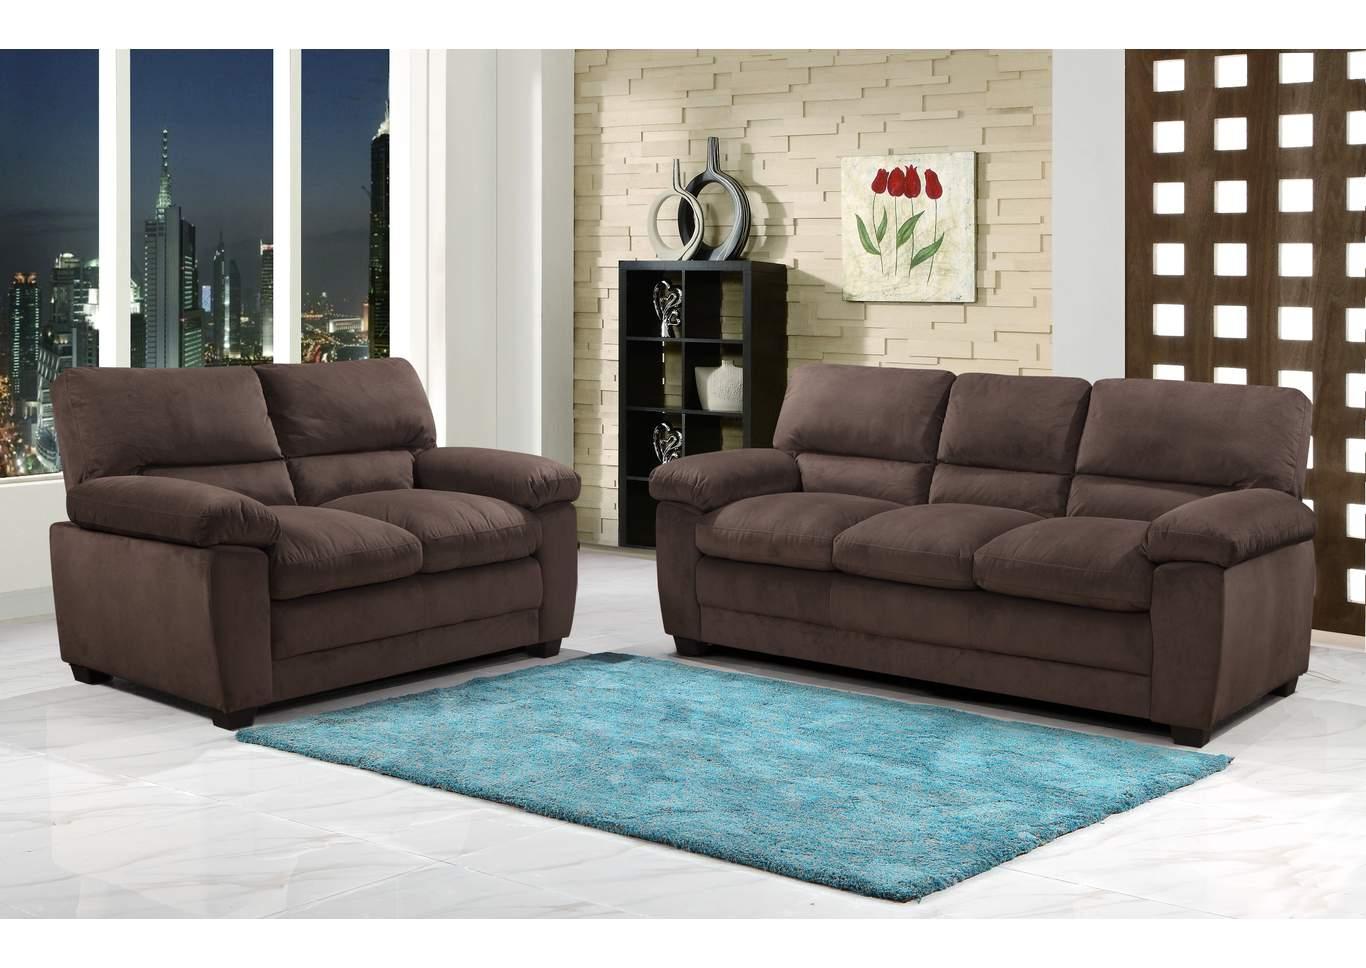 Contemporary, Modern Sofa Set MAXX GHF-808857533319 in Brown Fabric